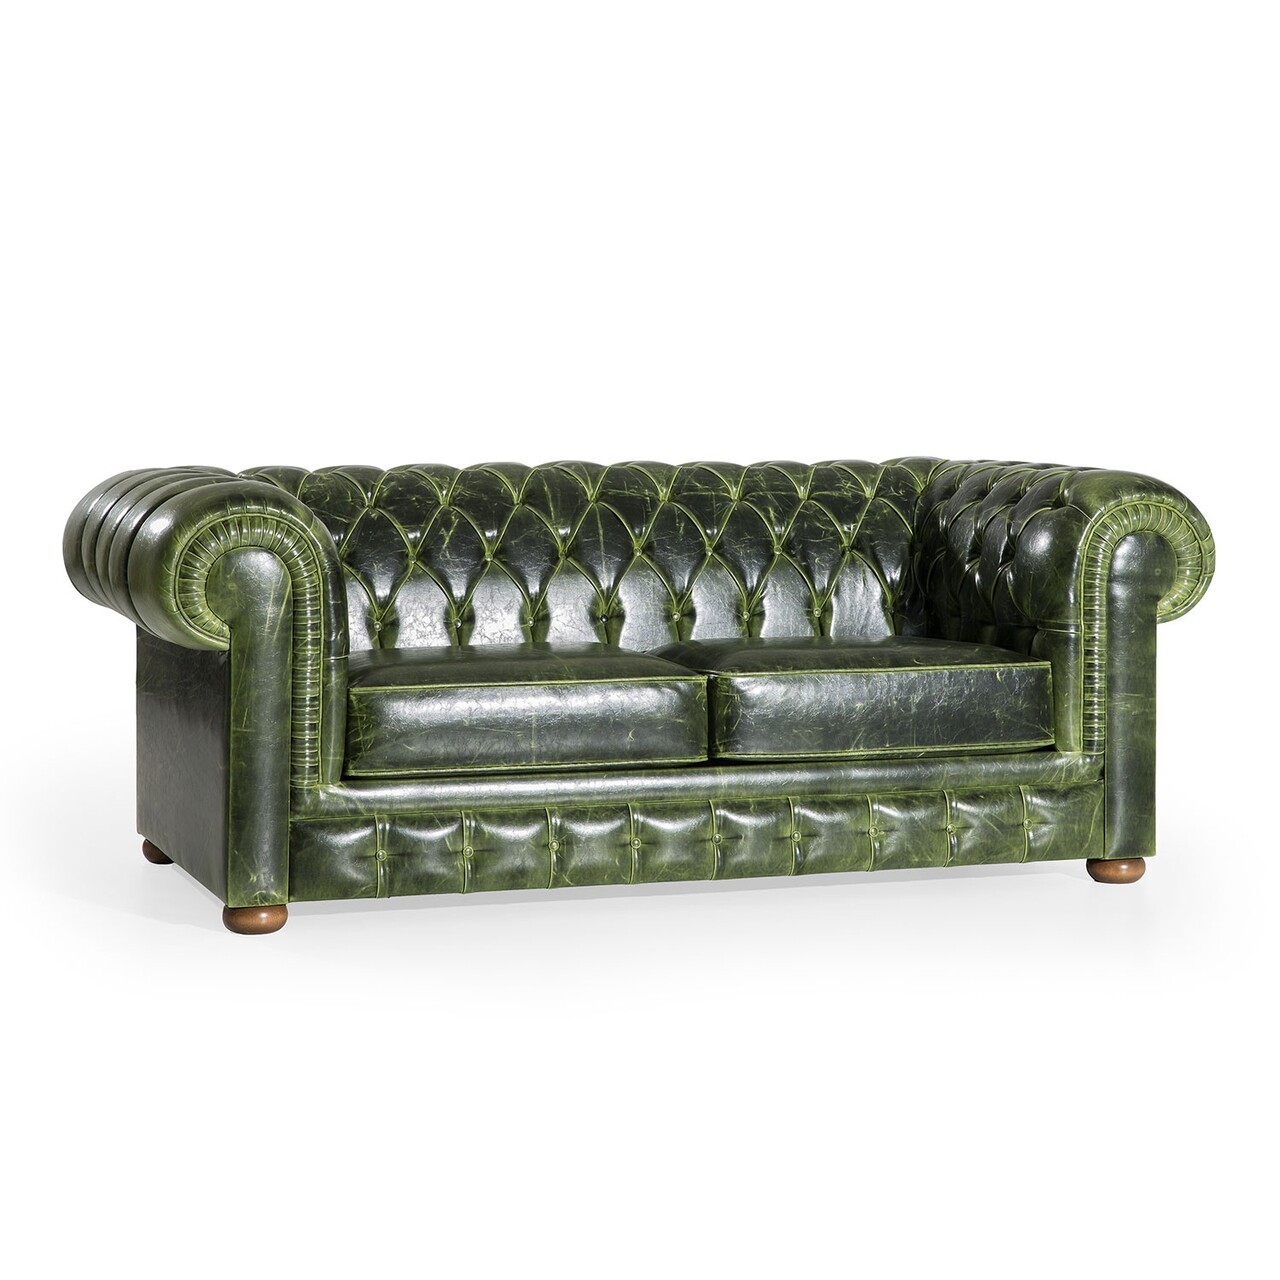 Cupon kétszemélyes kanapé, ndesign, 185x100x78 cm, fa, zöld